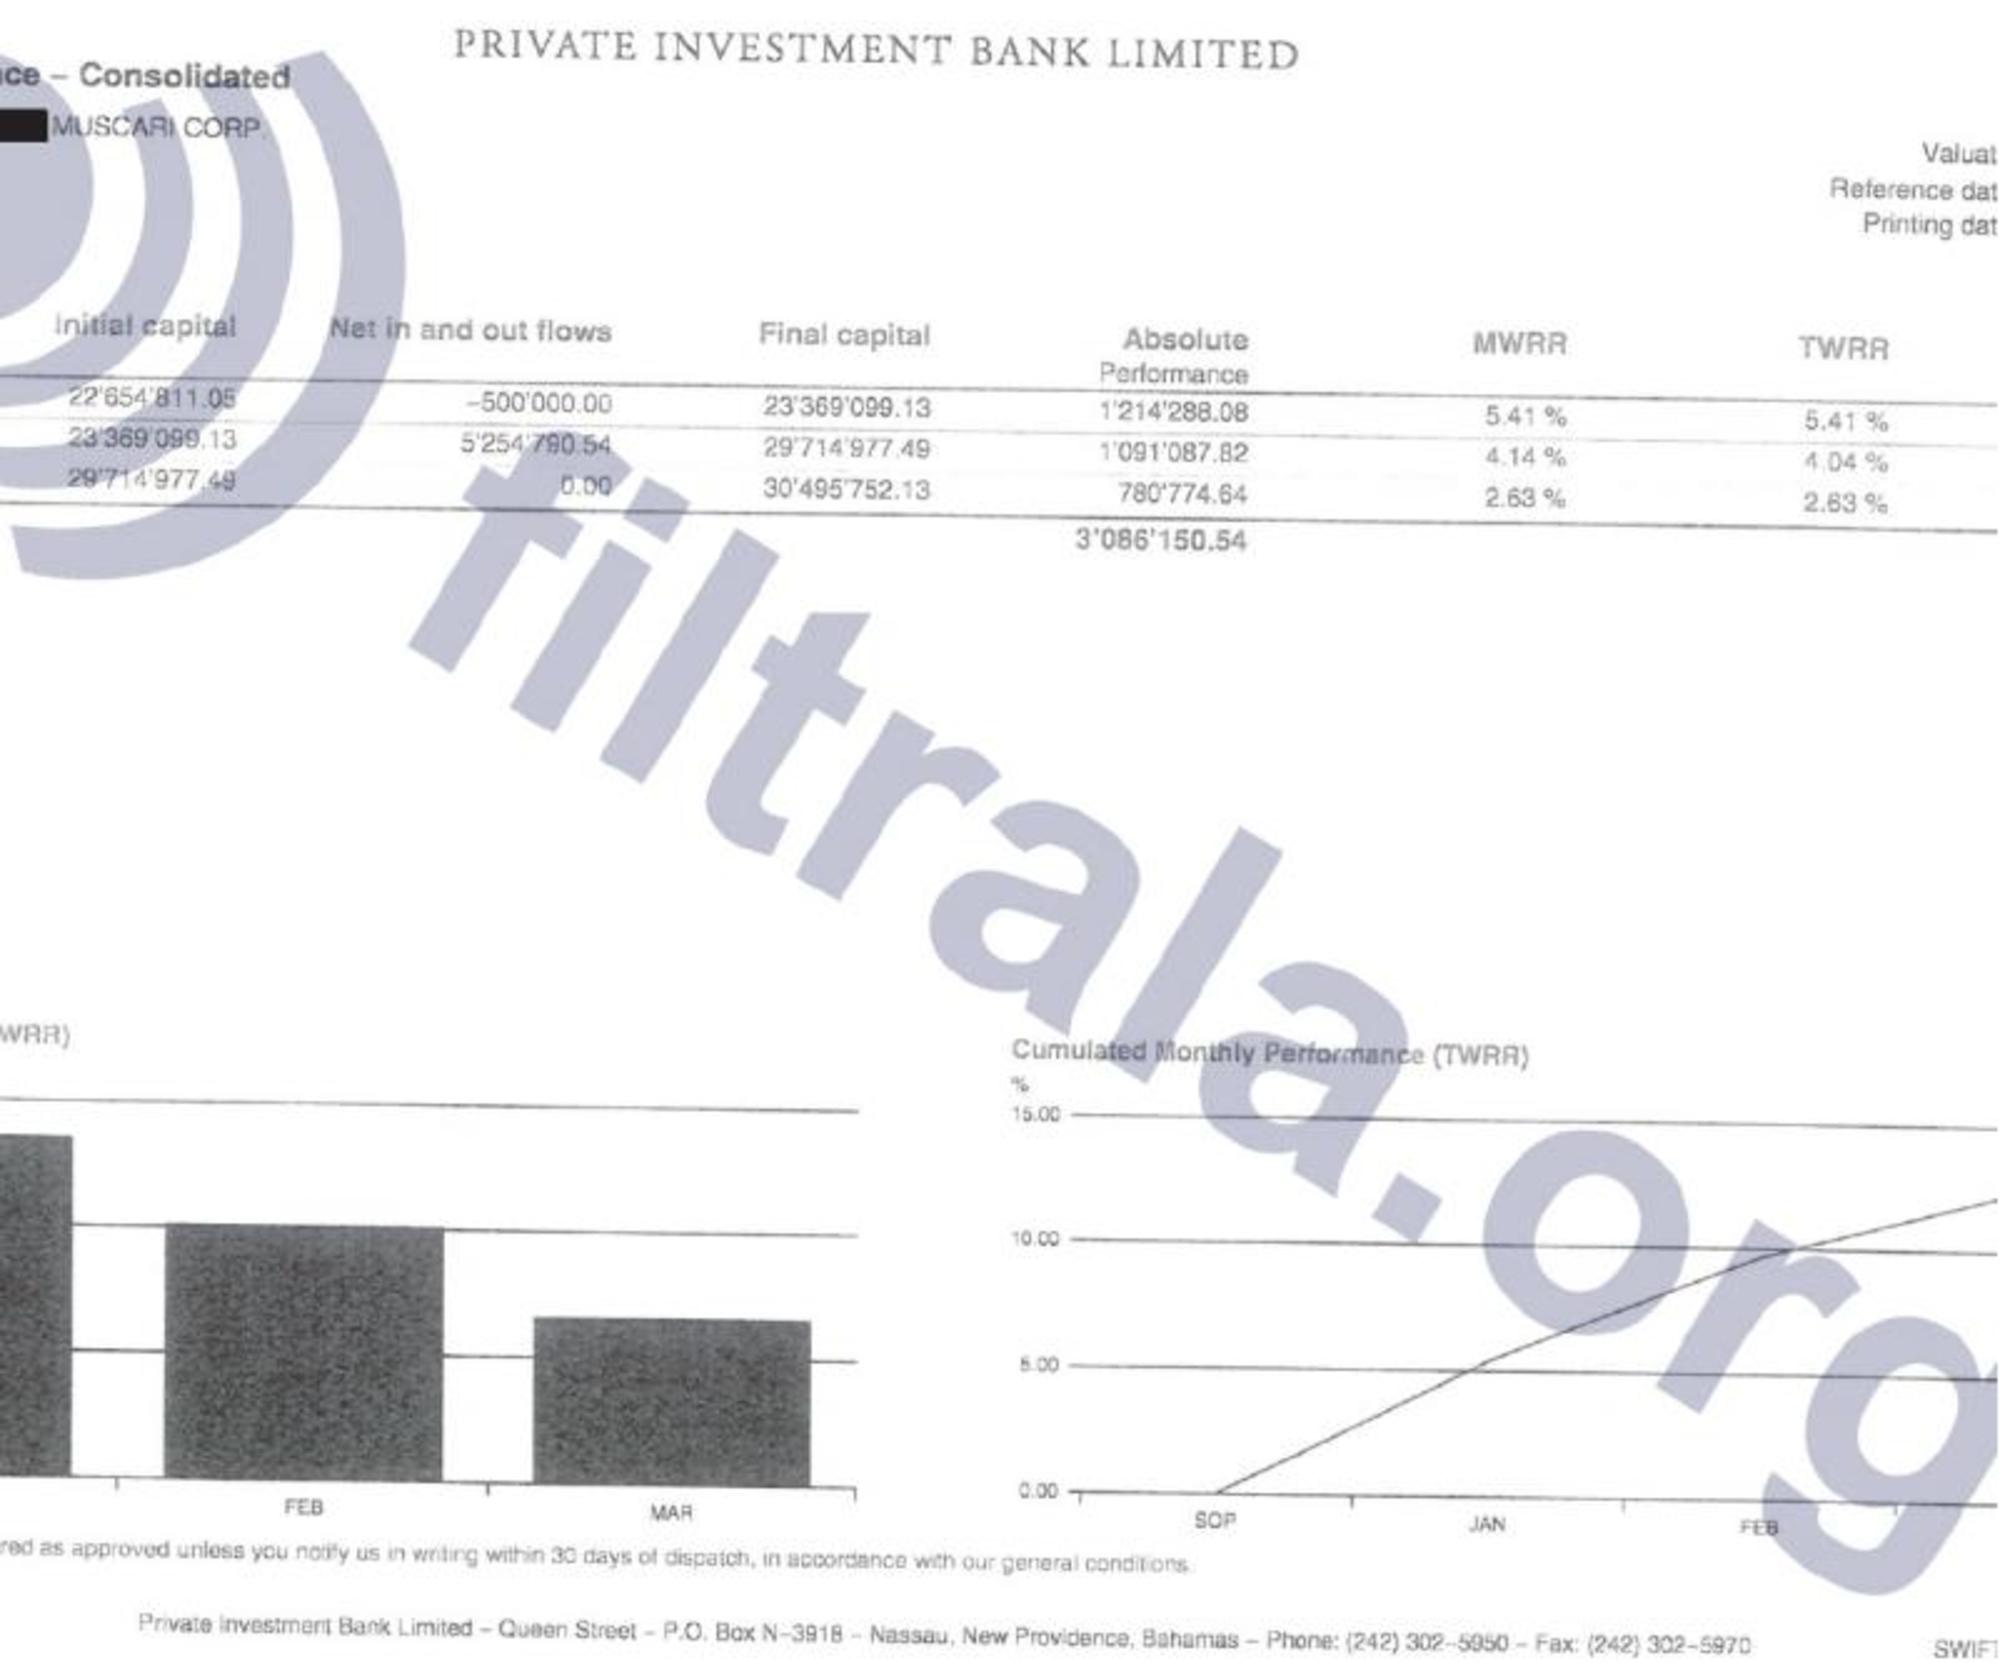 Informe financiero de Muscari Corp. en Private Investment Bank Limited, en Bahamas.